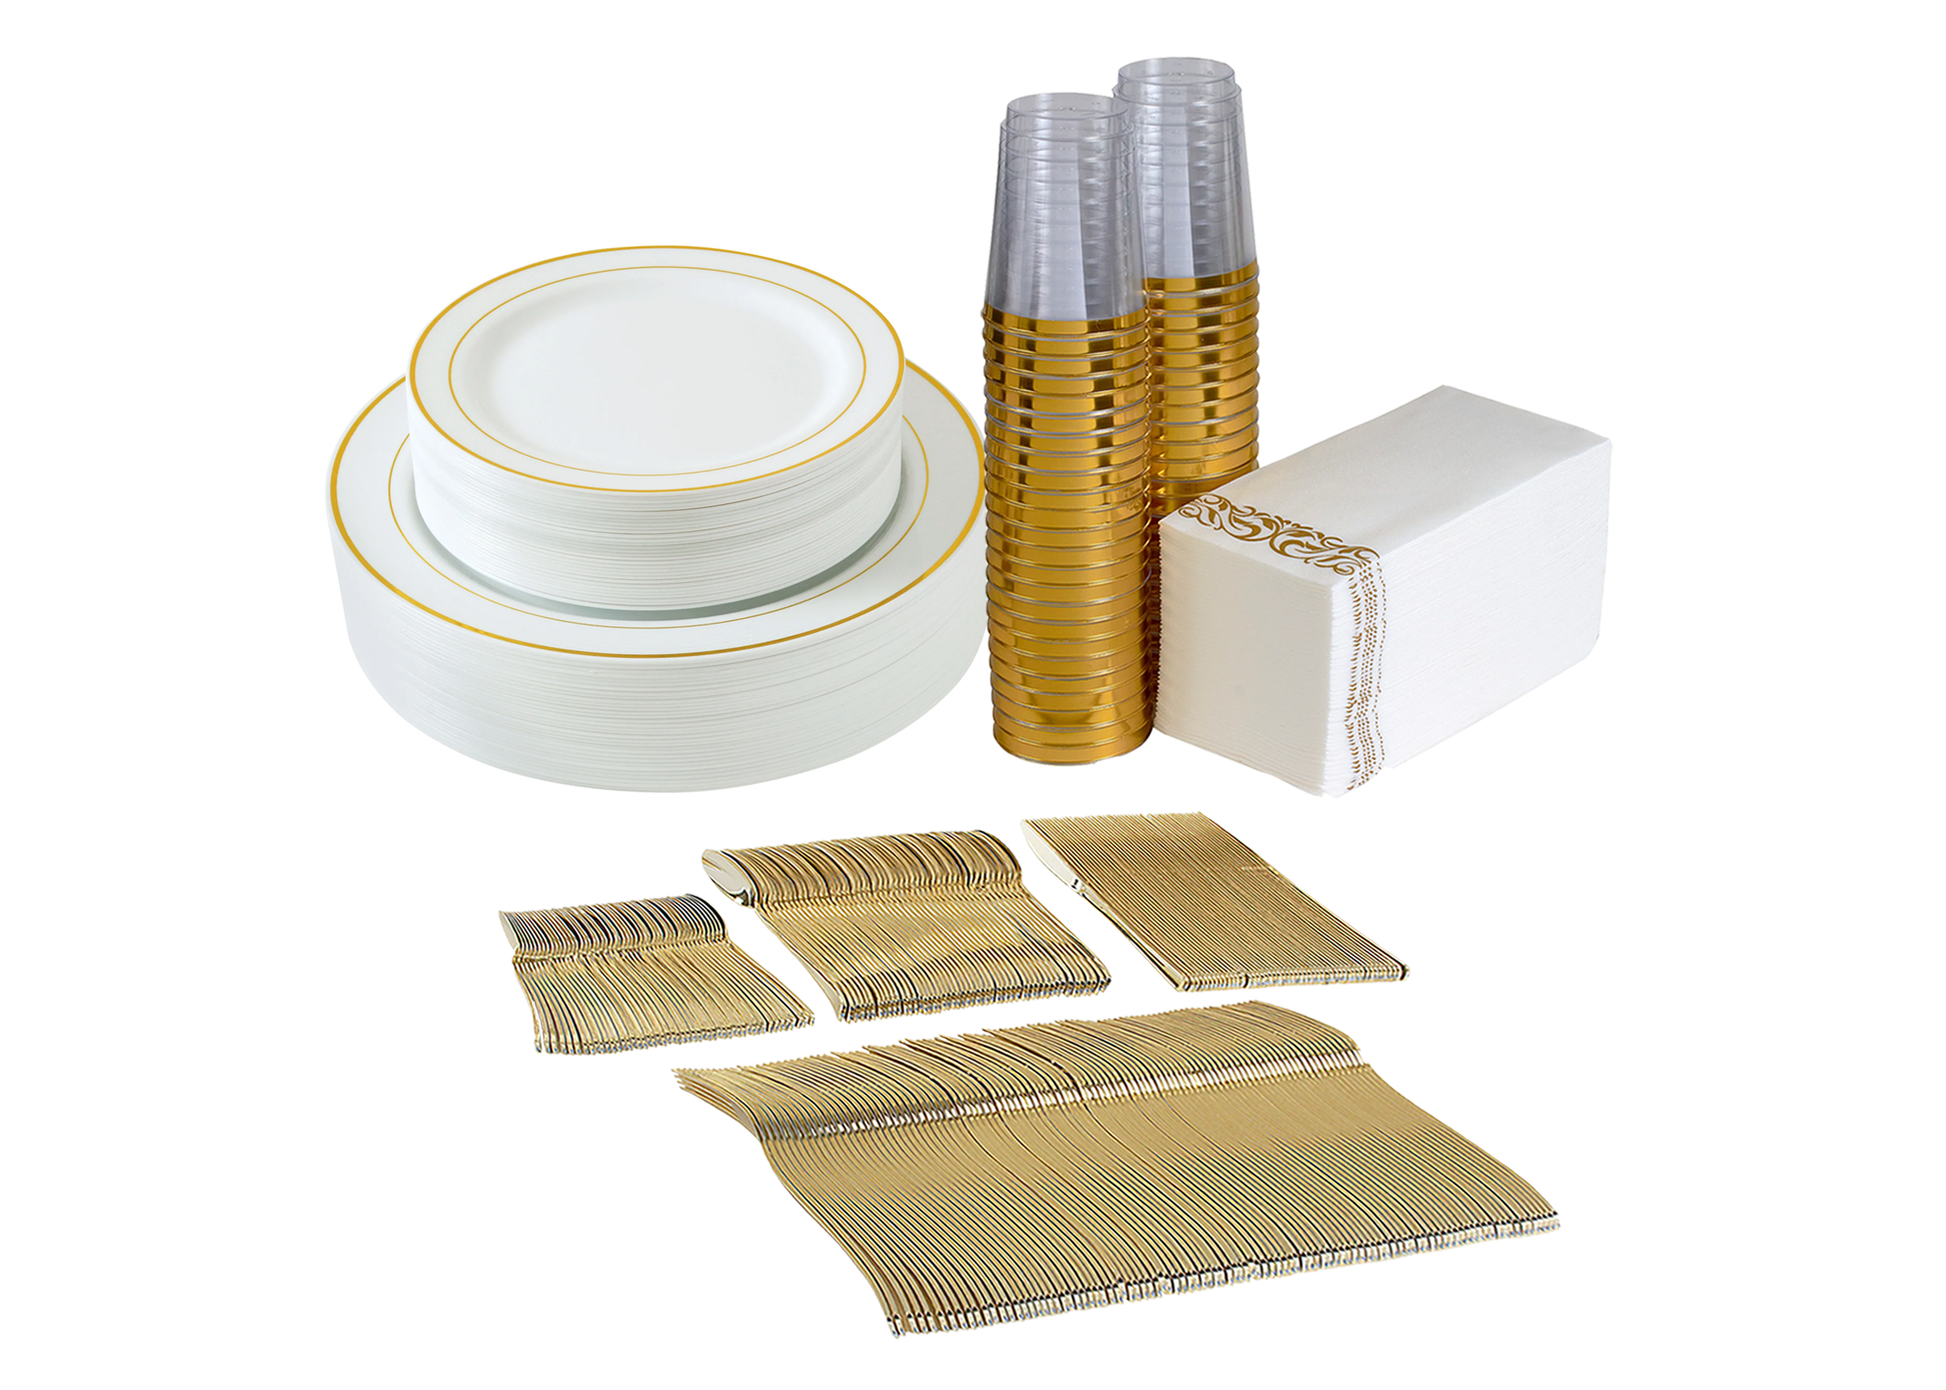 Disposable dinnerware set gold rim plastic plates